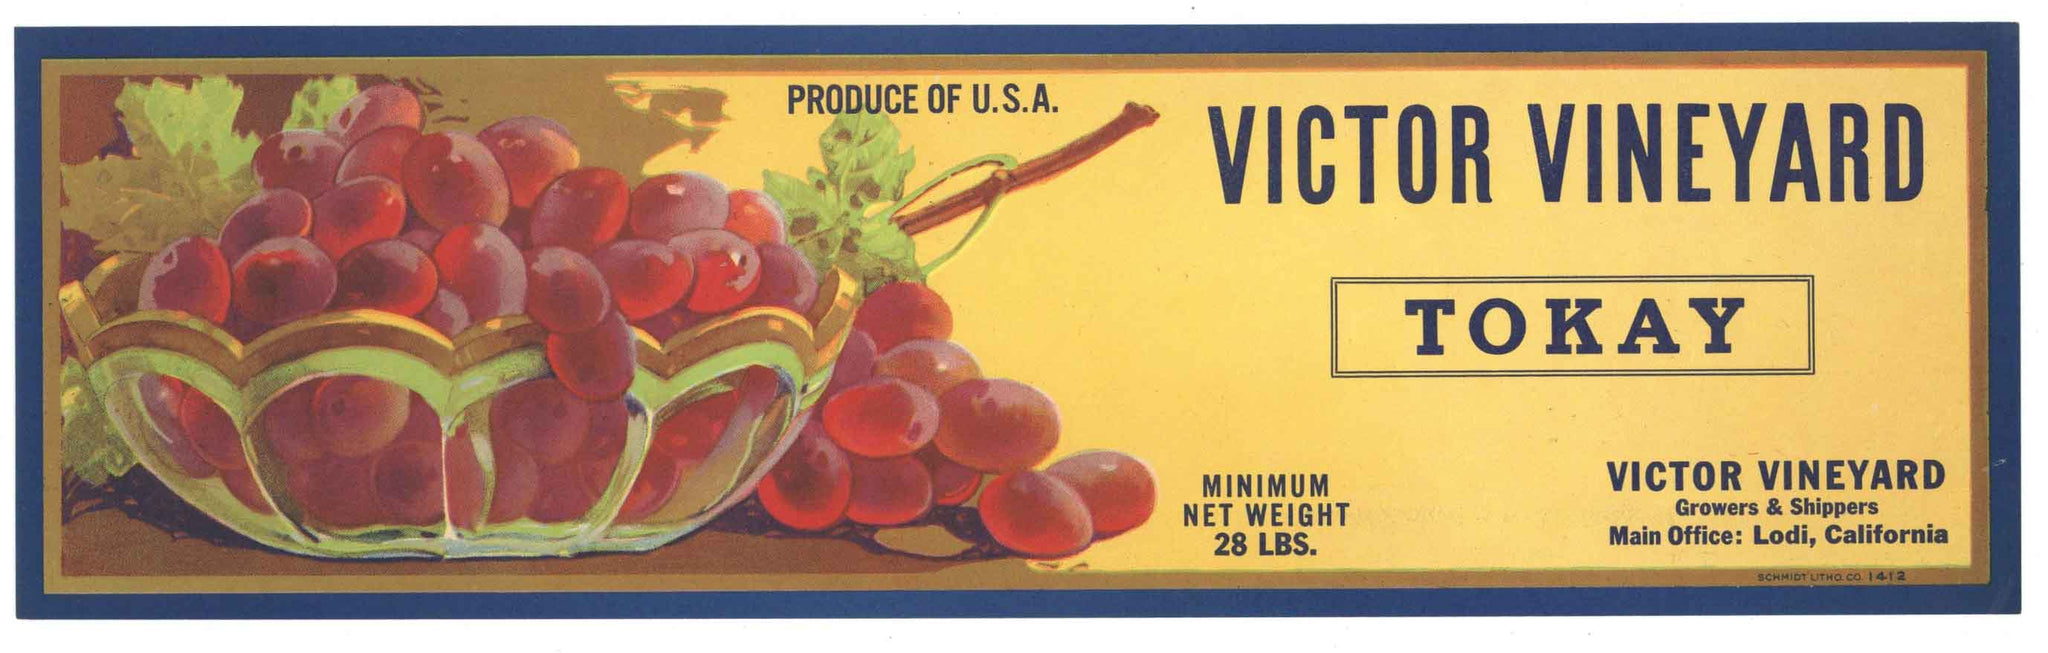 Victor Vineyard Brand Vintage Lodi Tokay Grape Crate Label